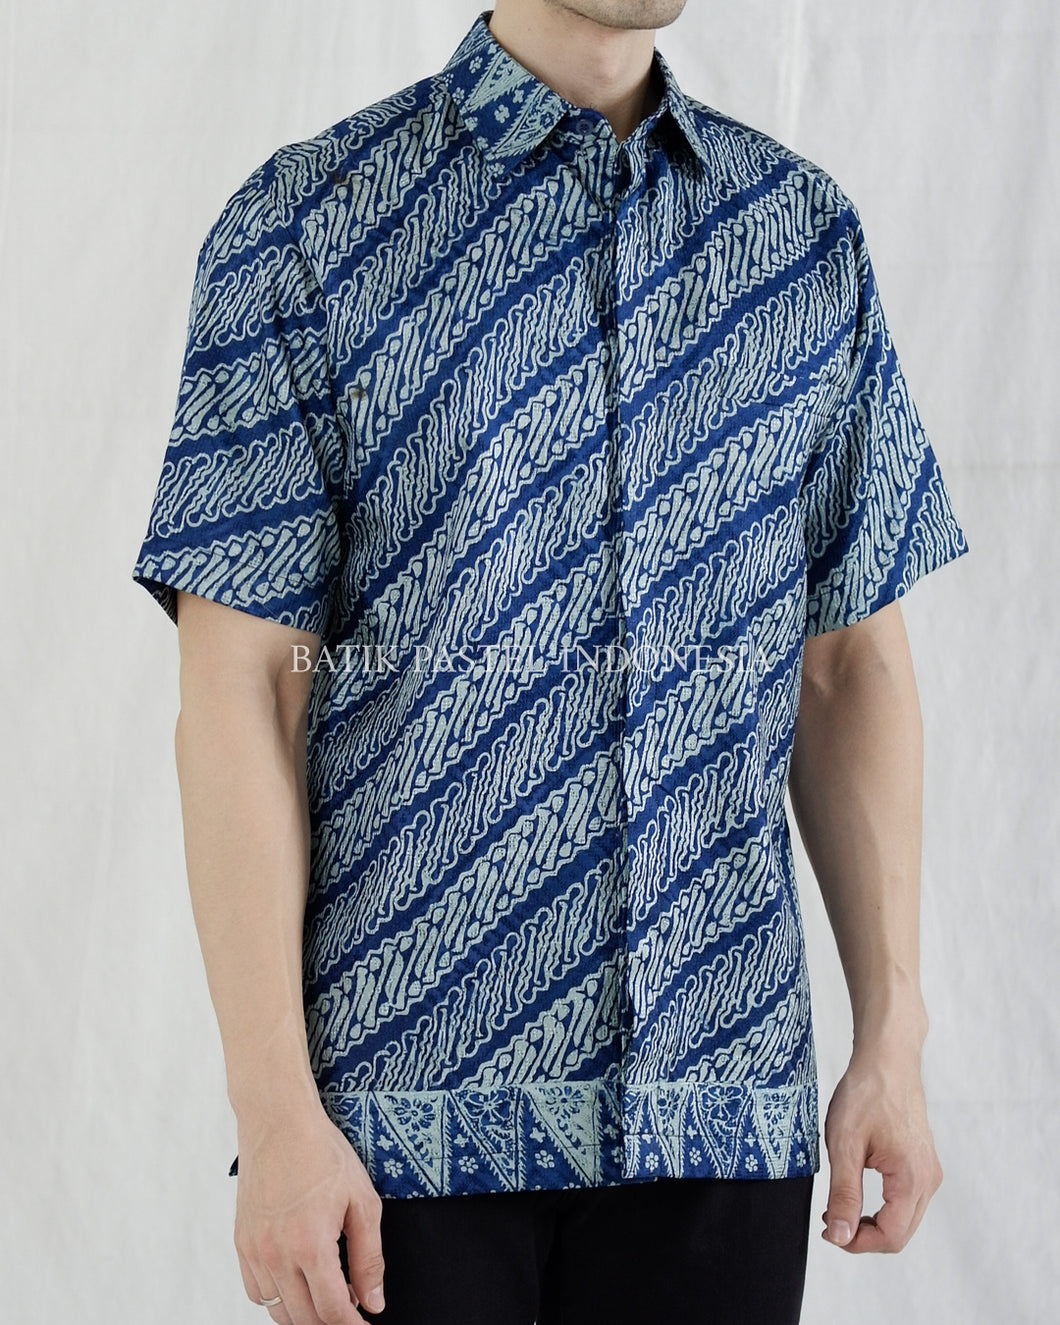 PO Batik Shirt - Linda Set 120